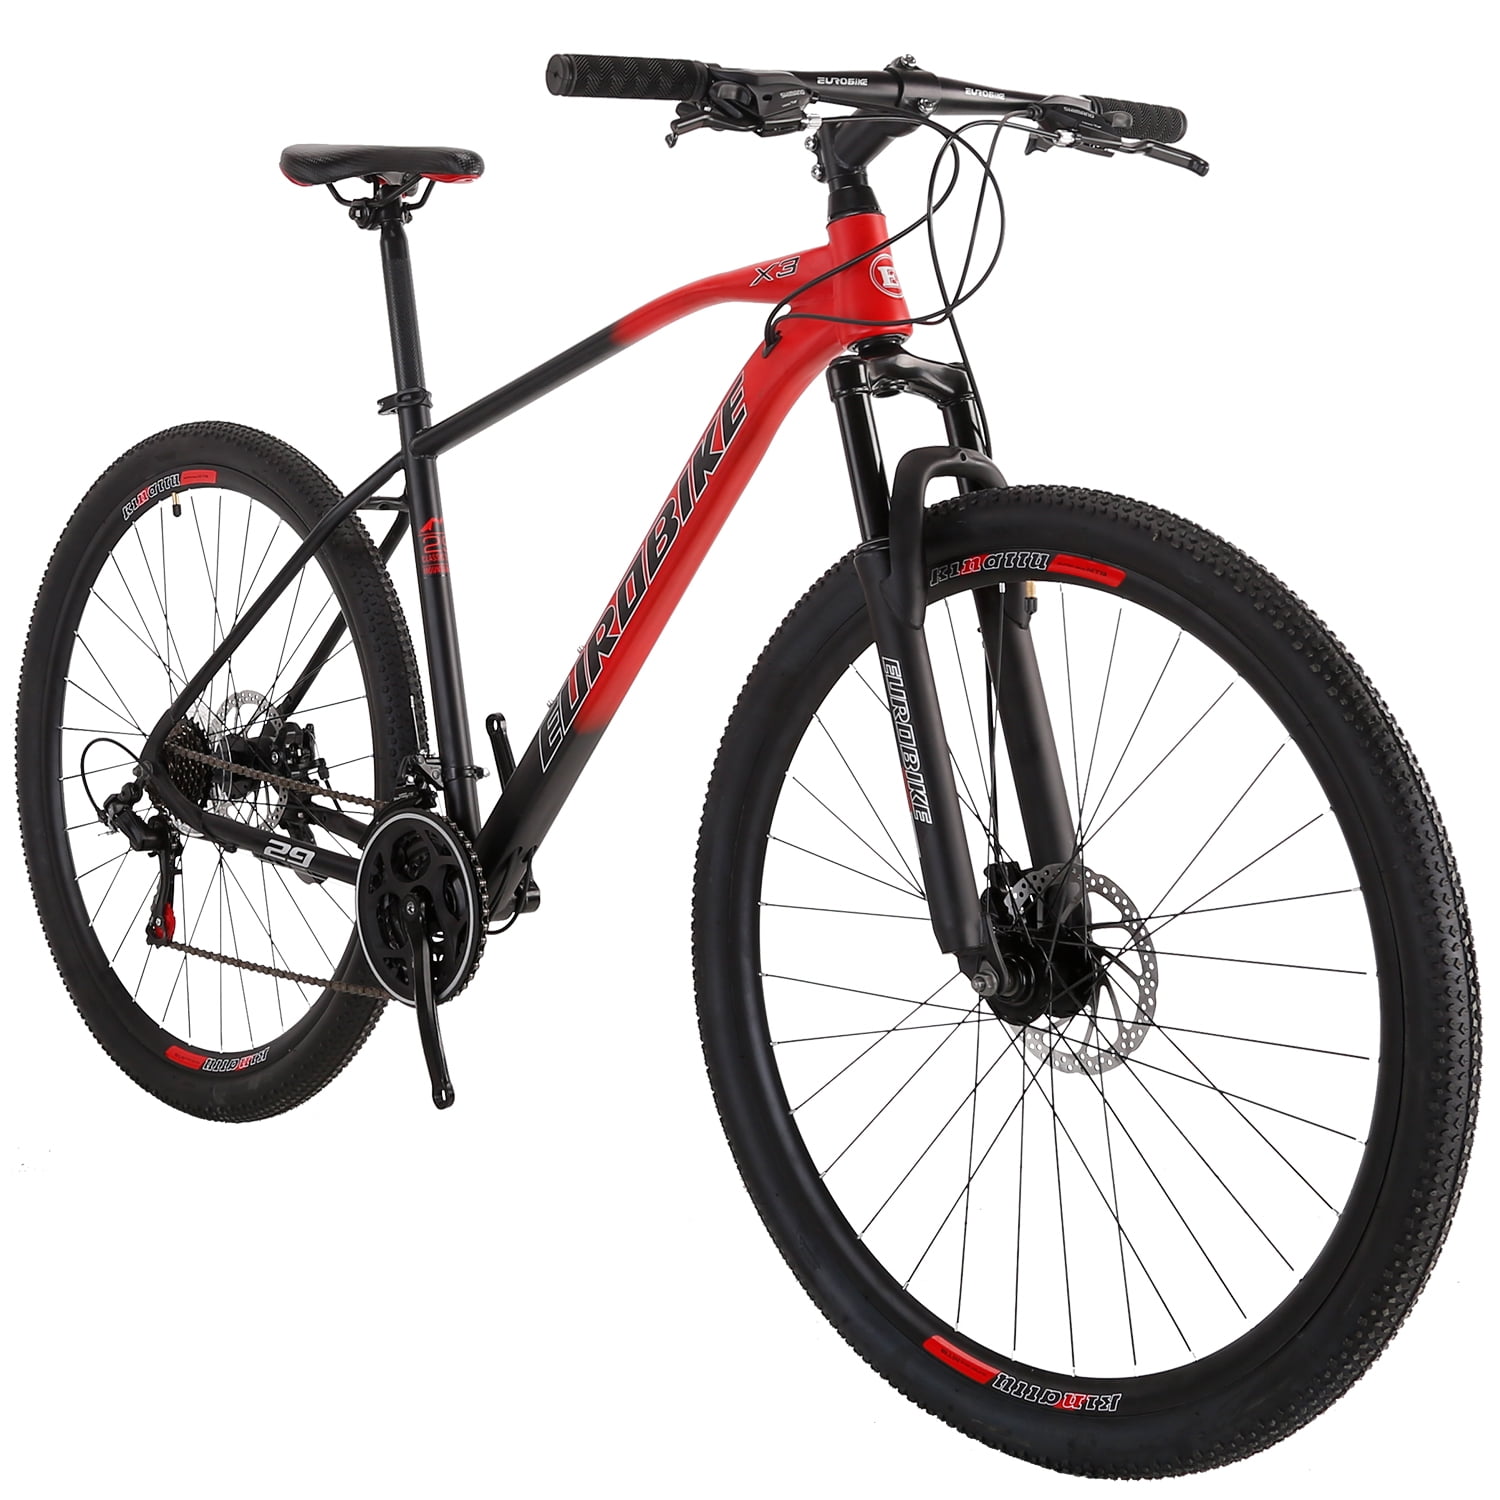 29 inch mountain bike for sale